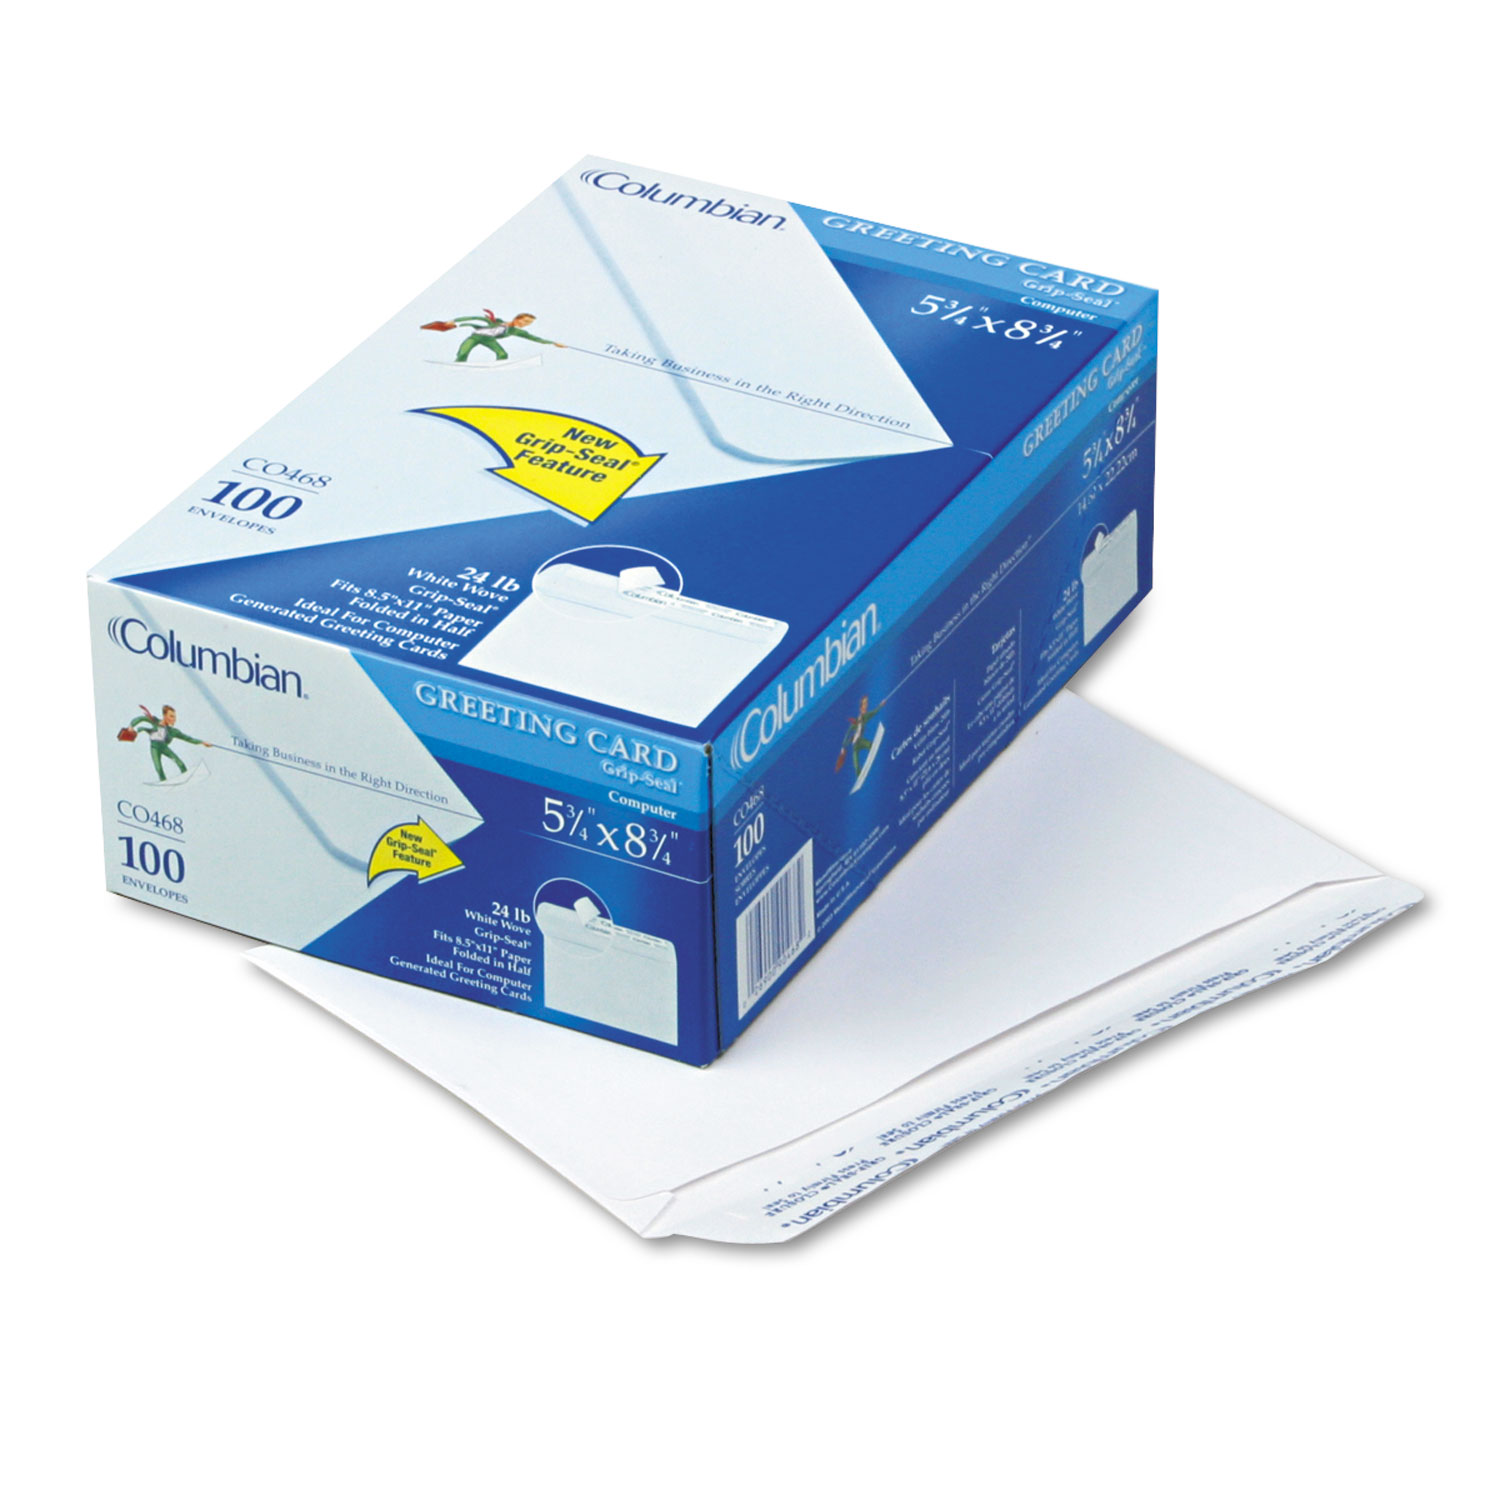  Columbian COLO468 Invitation & Greeting Card Envelope, A-9, Monarch Flap, Self-Adhesive Closure, 5.75 x 8.75, White, 100/Box (QUACO468) 